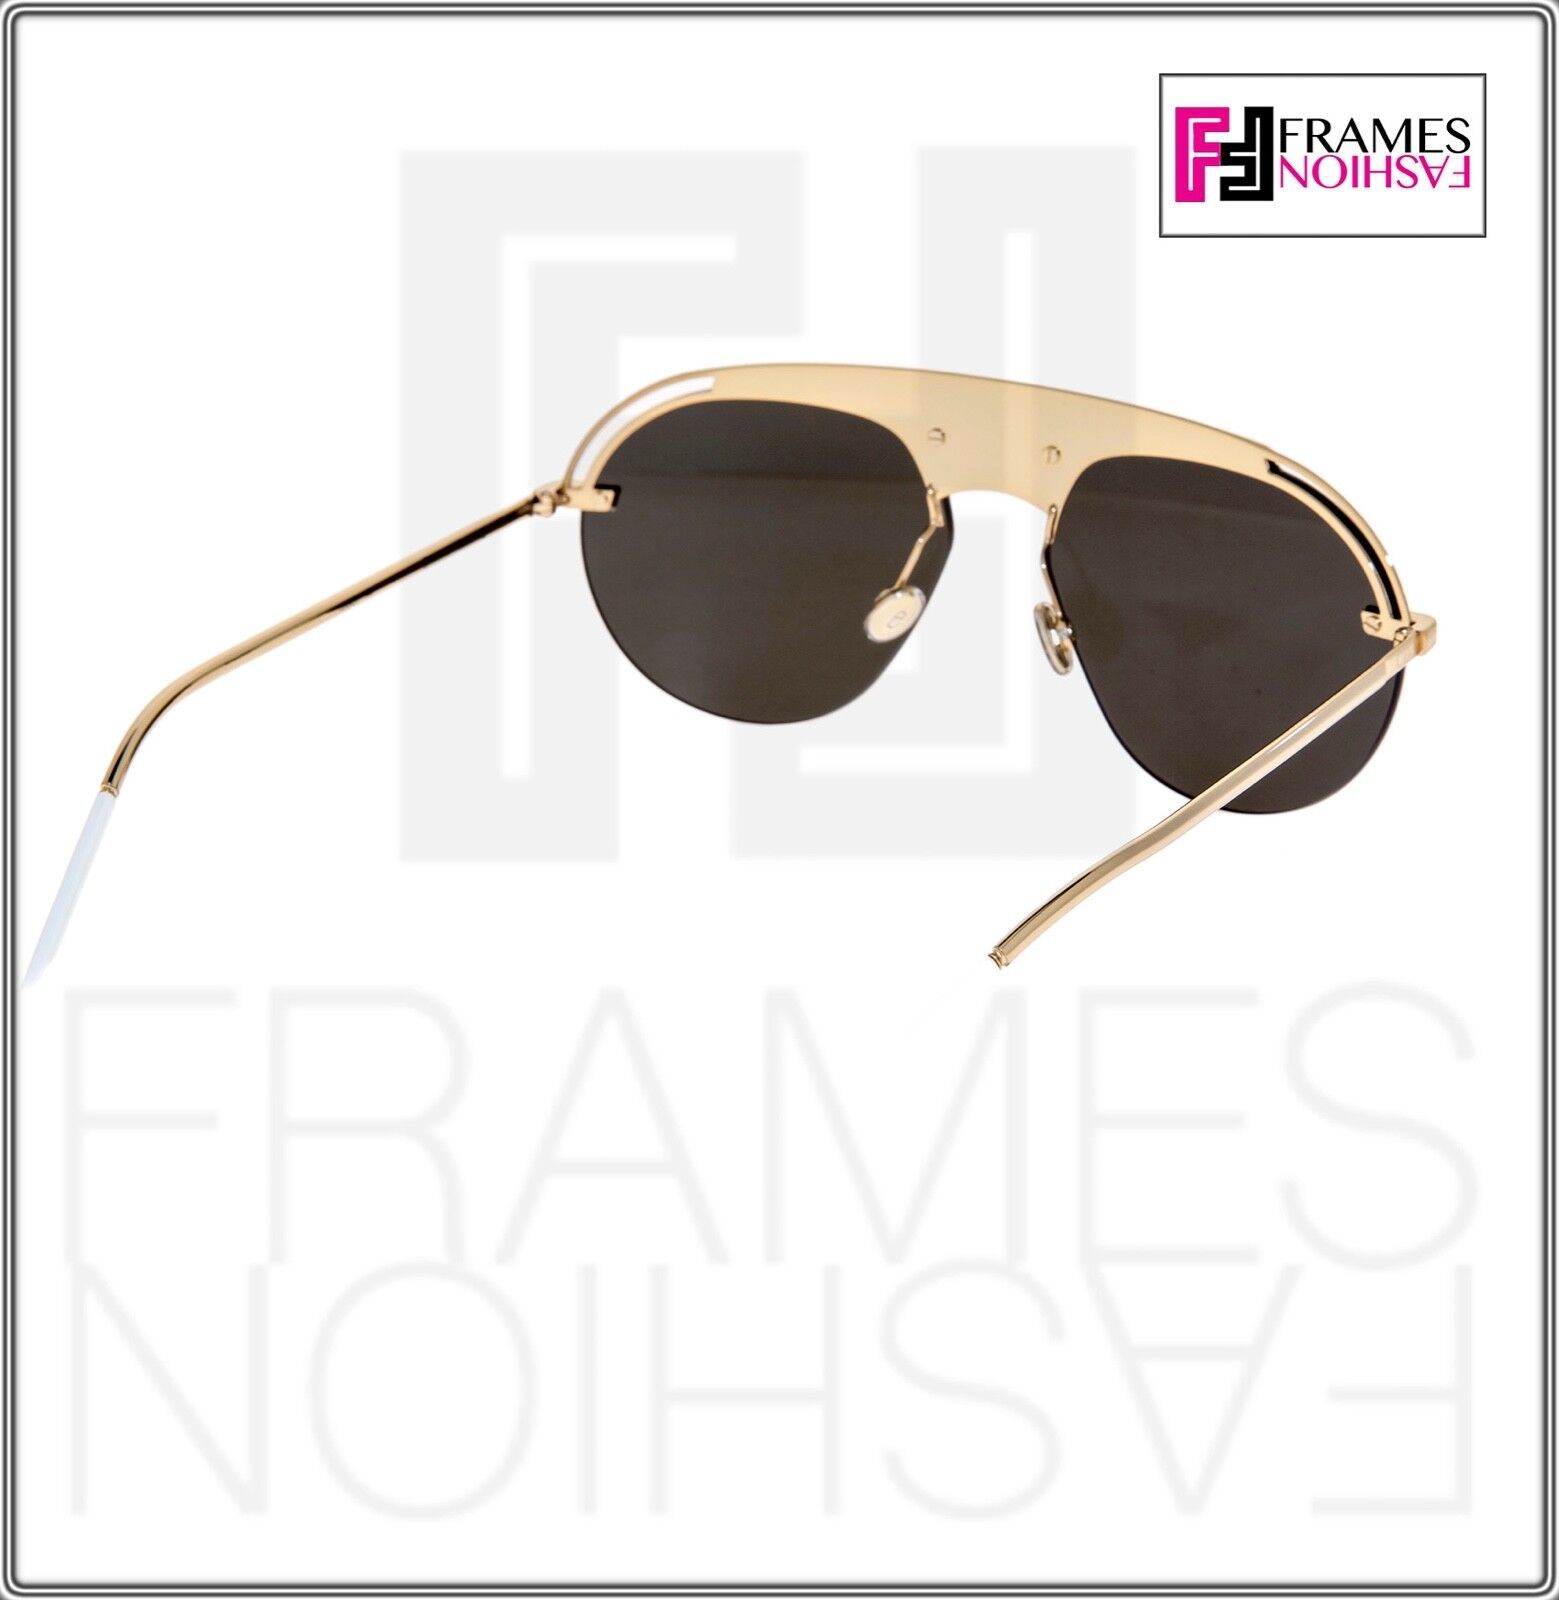 Dior - Sunglasses - Dio(r)evolution - Black & Gold - Dior Eyewear